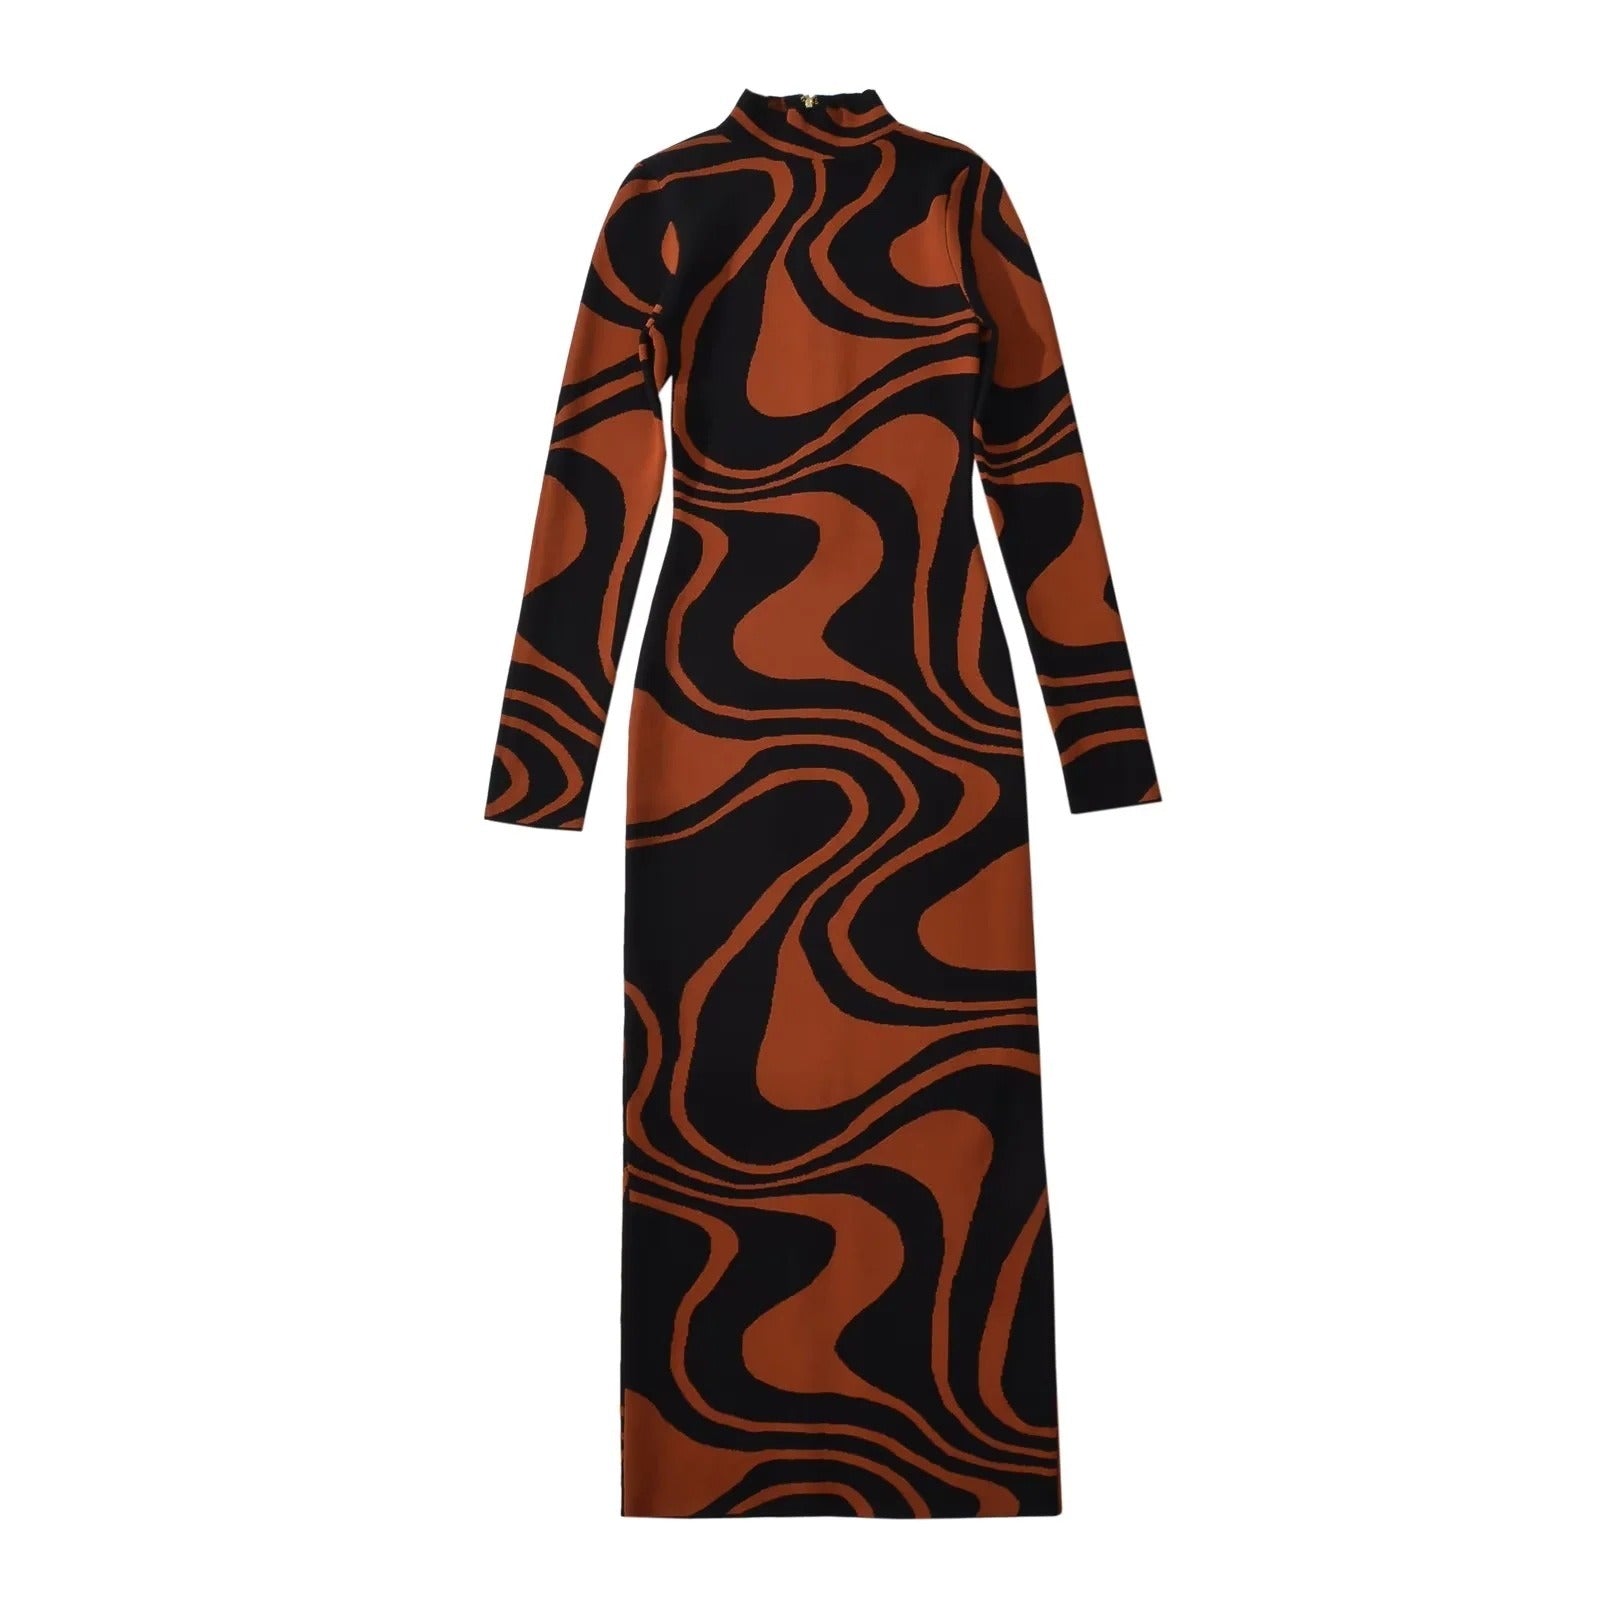 Abstract Wave Knit Dress - Kelly Obi New York